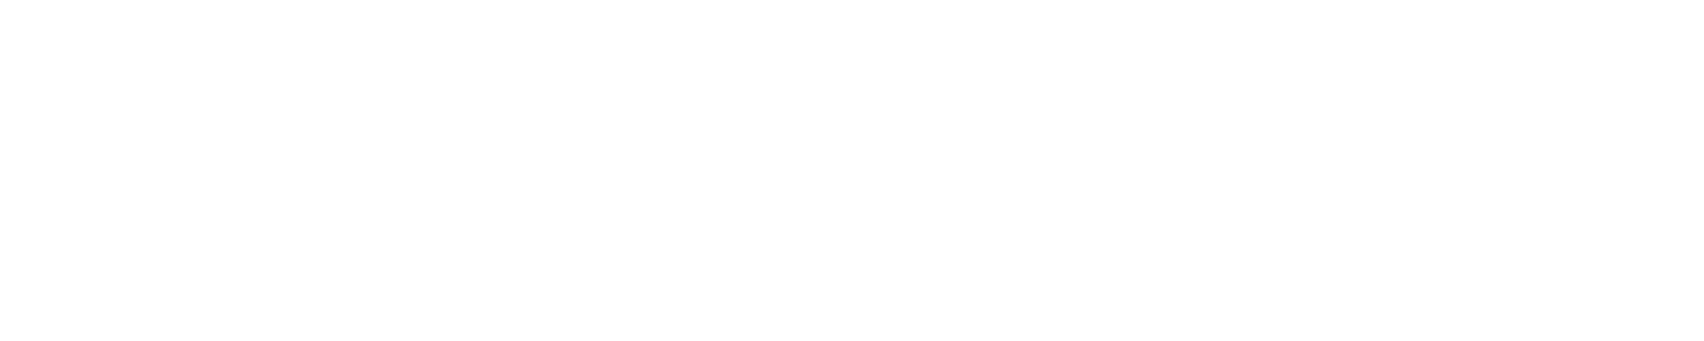 Himalaya Co-operative